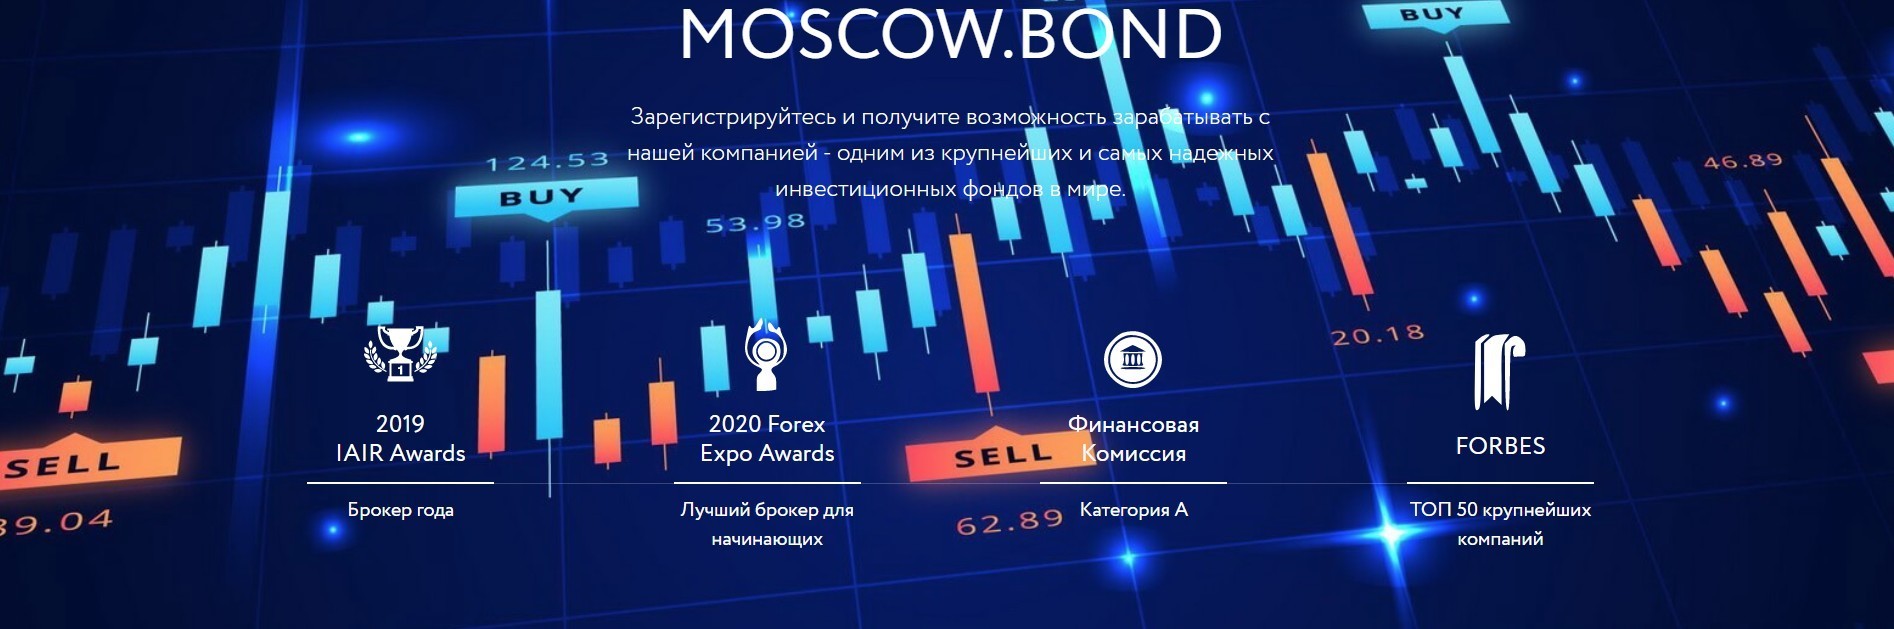 Moscow.bond платформа обзор